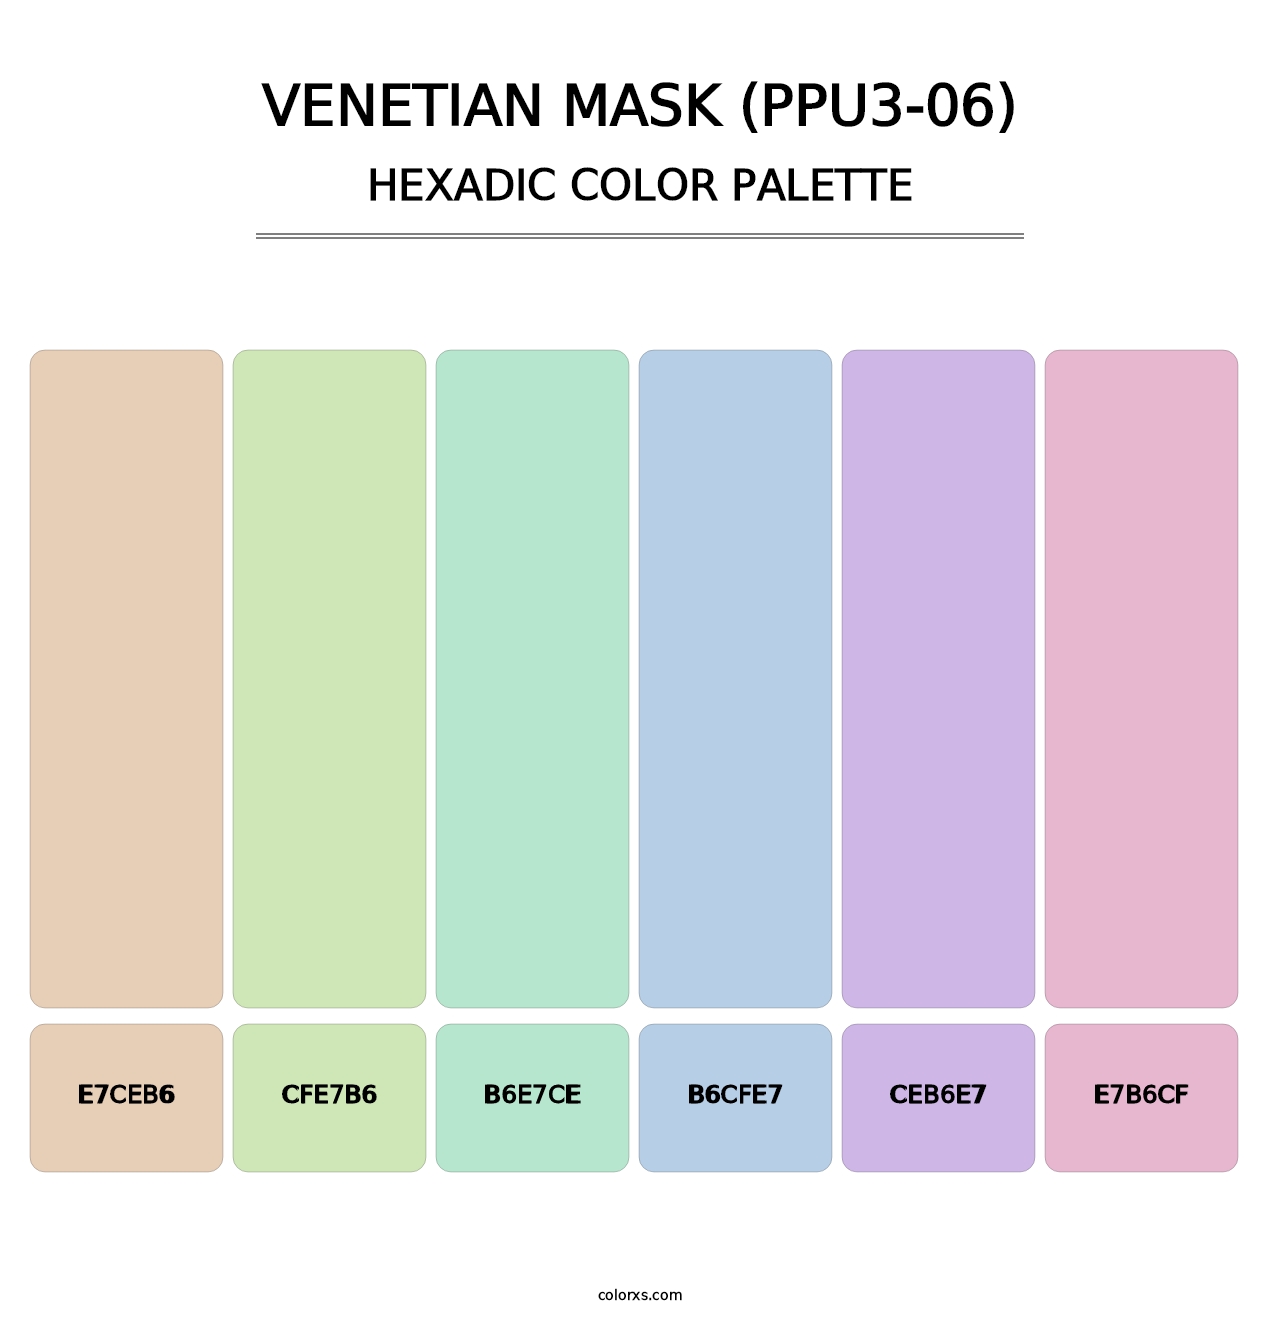 Venetian Mask (PPU3-06) - Hexadic Color Palette